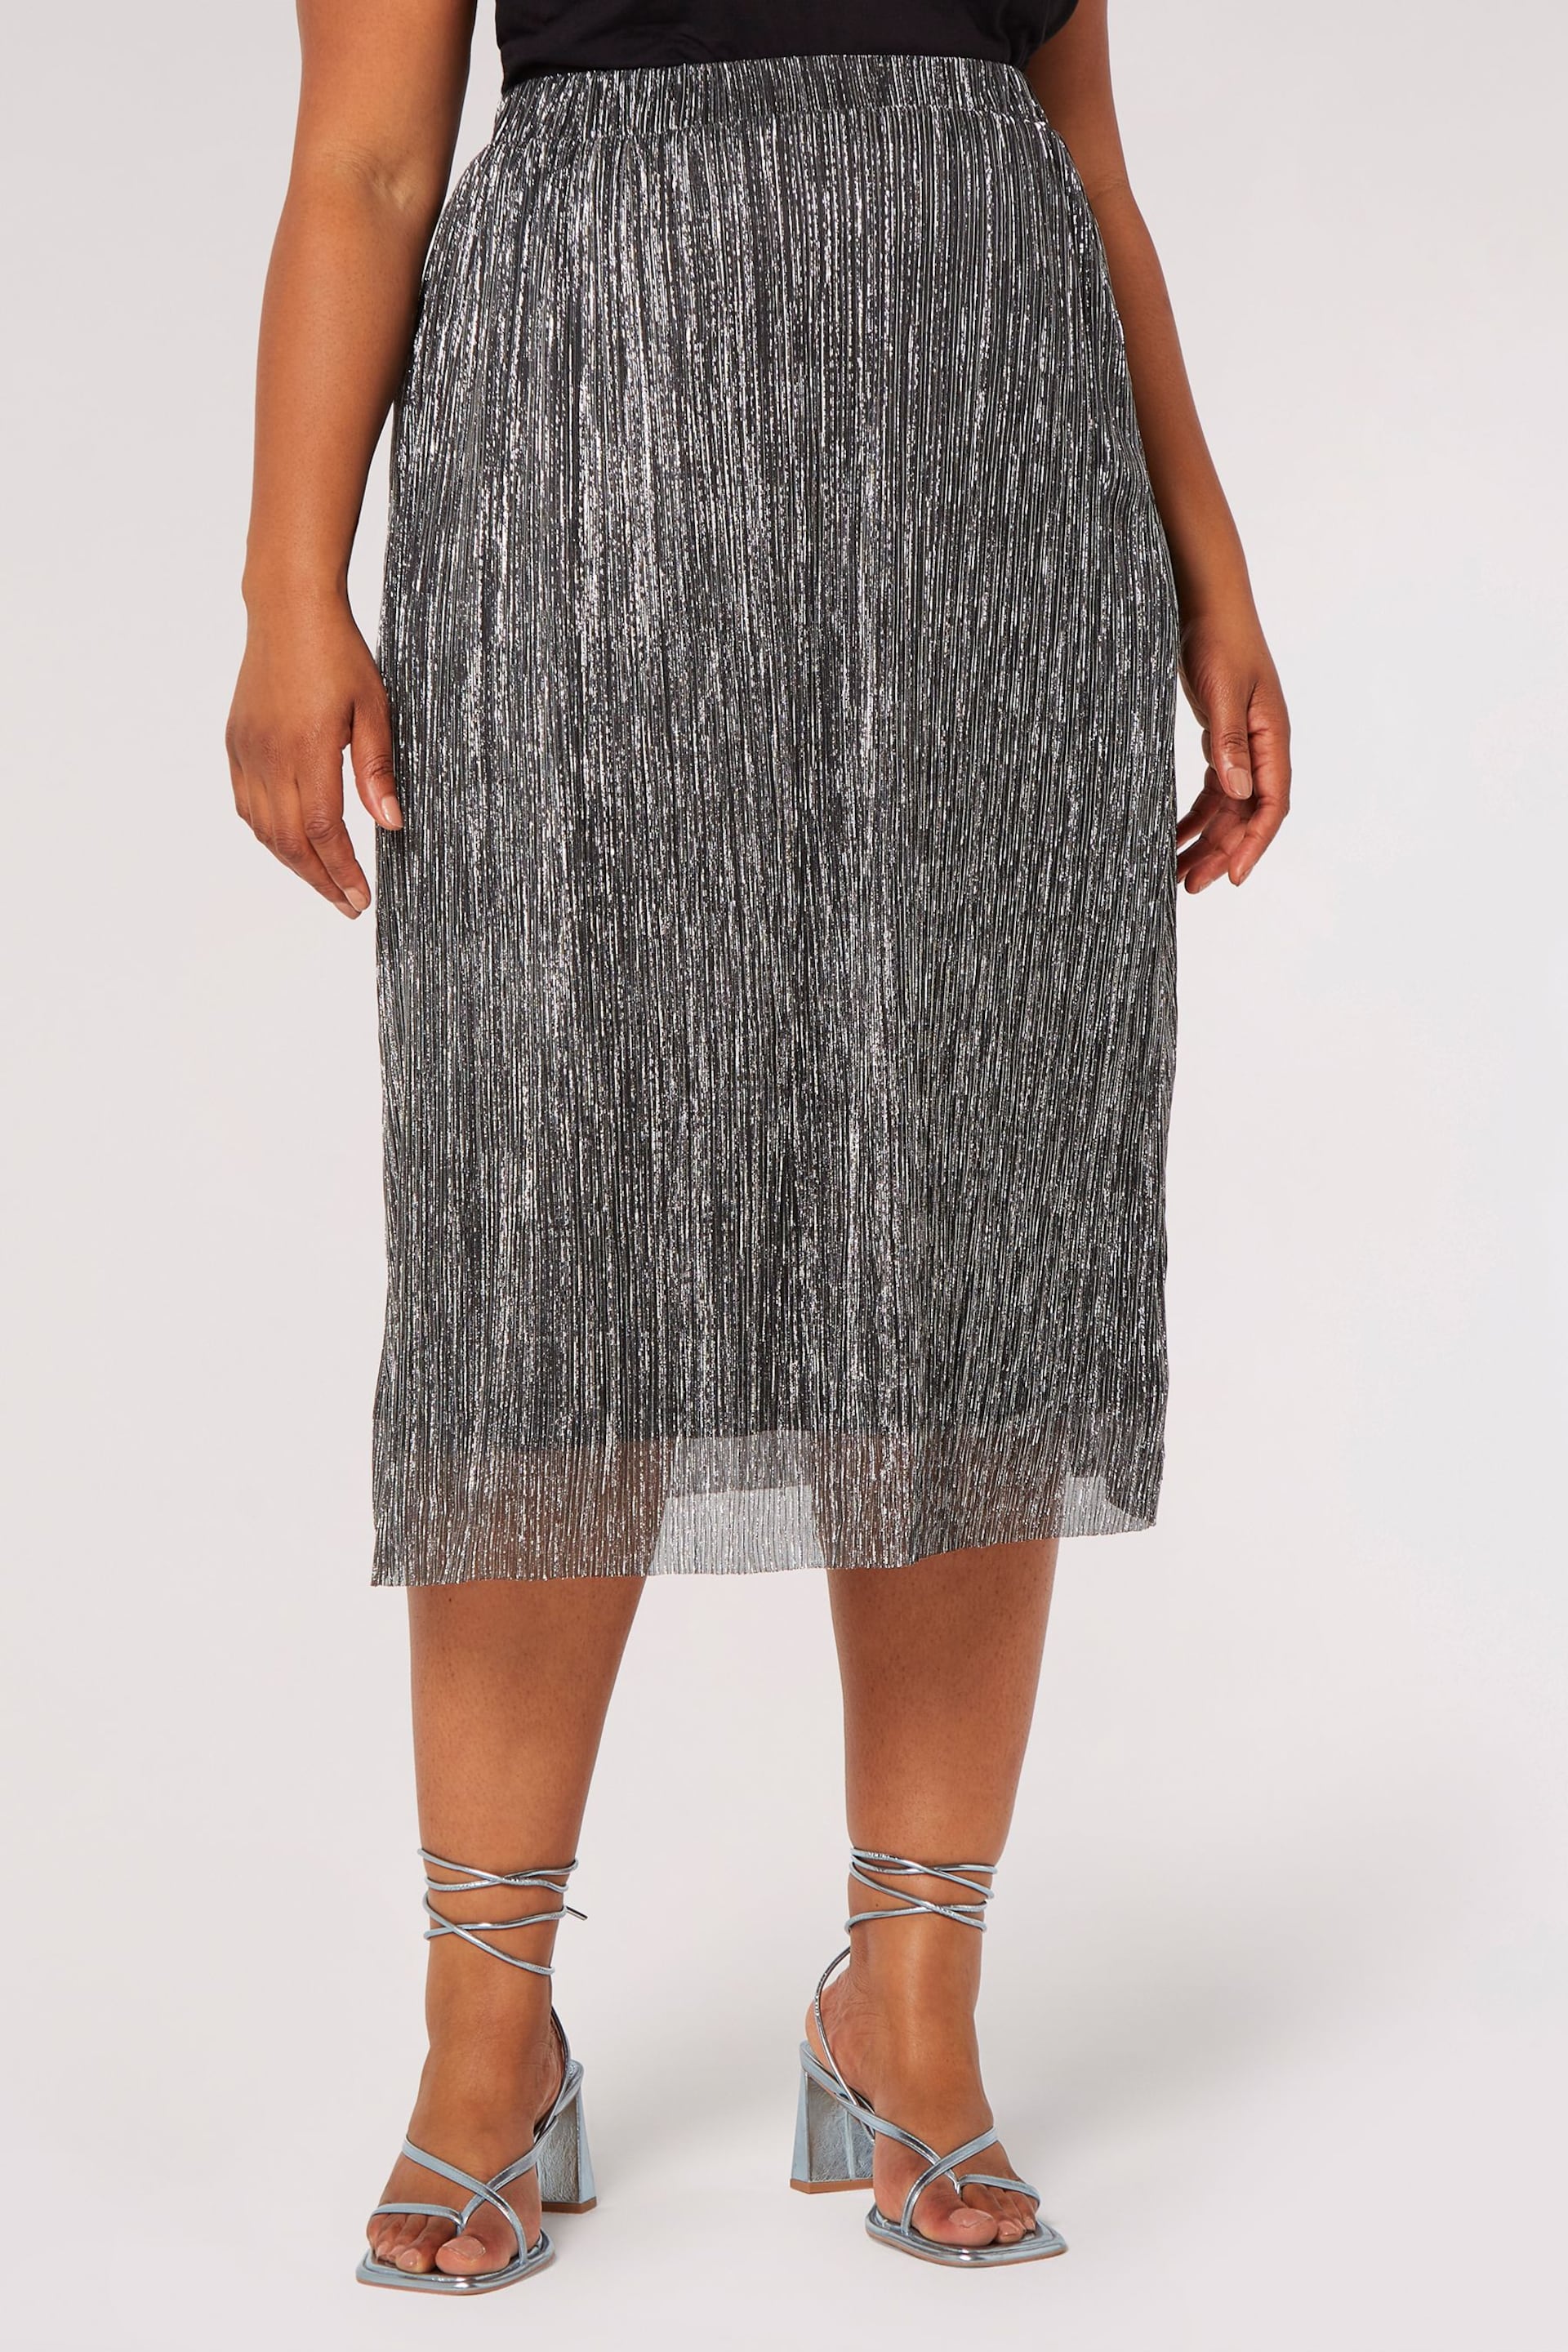 Apricot Silver Plisse Midi Skirt - Image 1 of 4